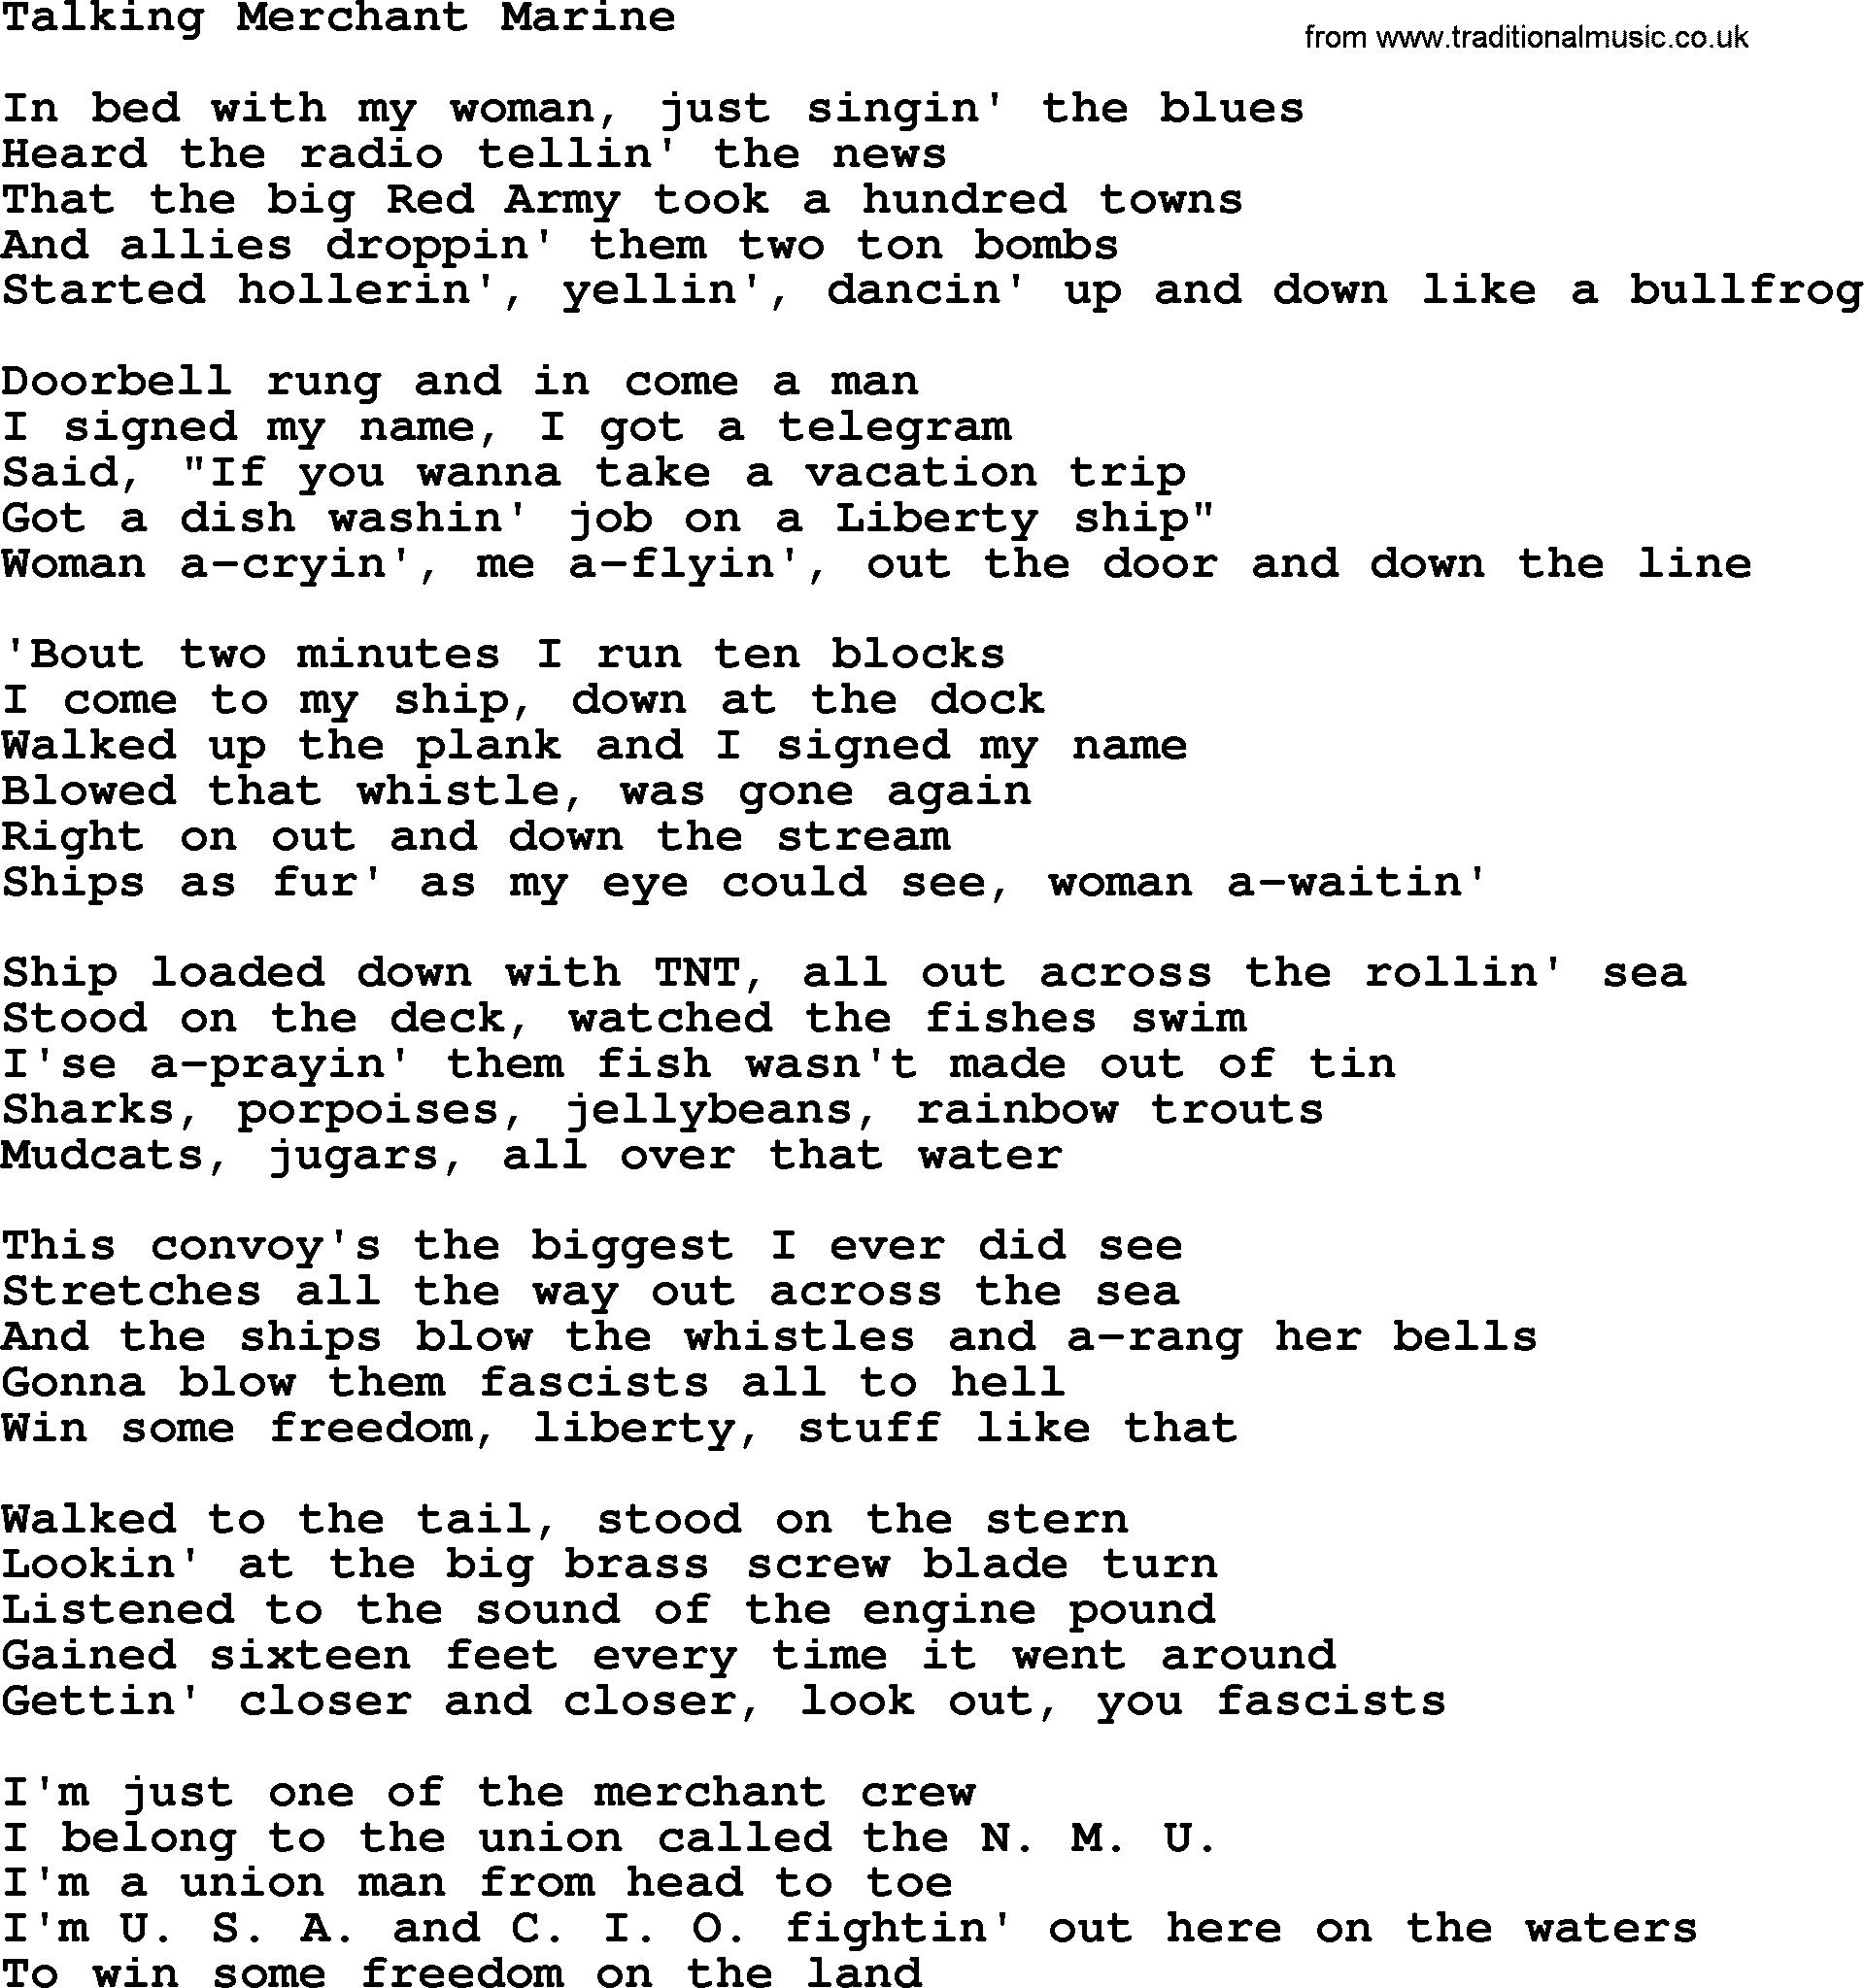 Woody Guthrie song Talking Merchant Marine lyrics